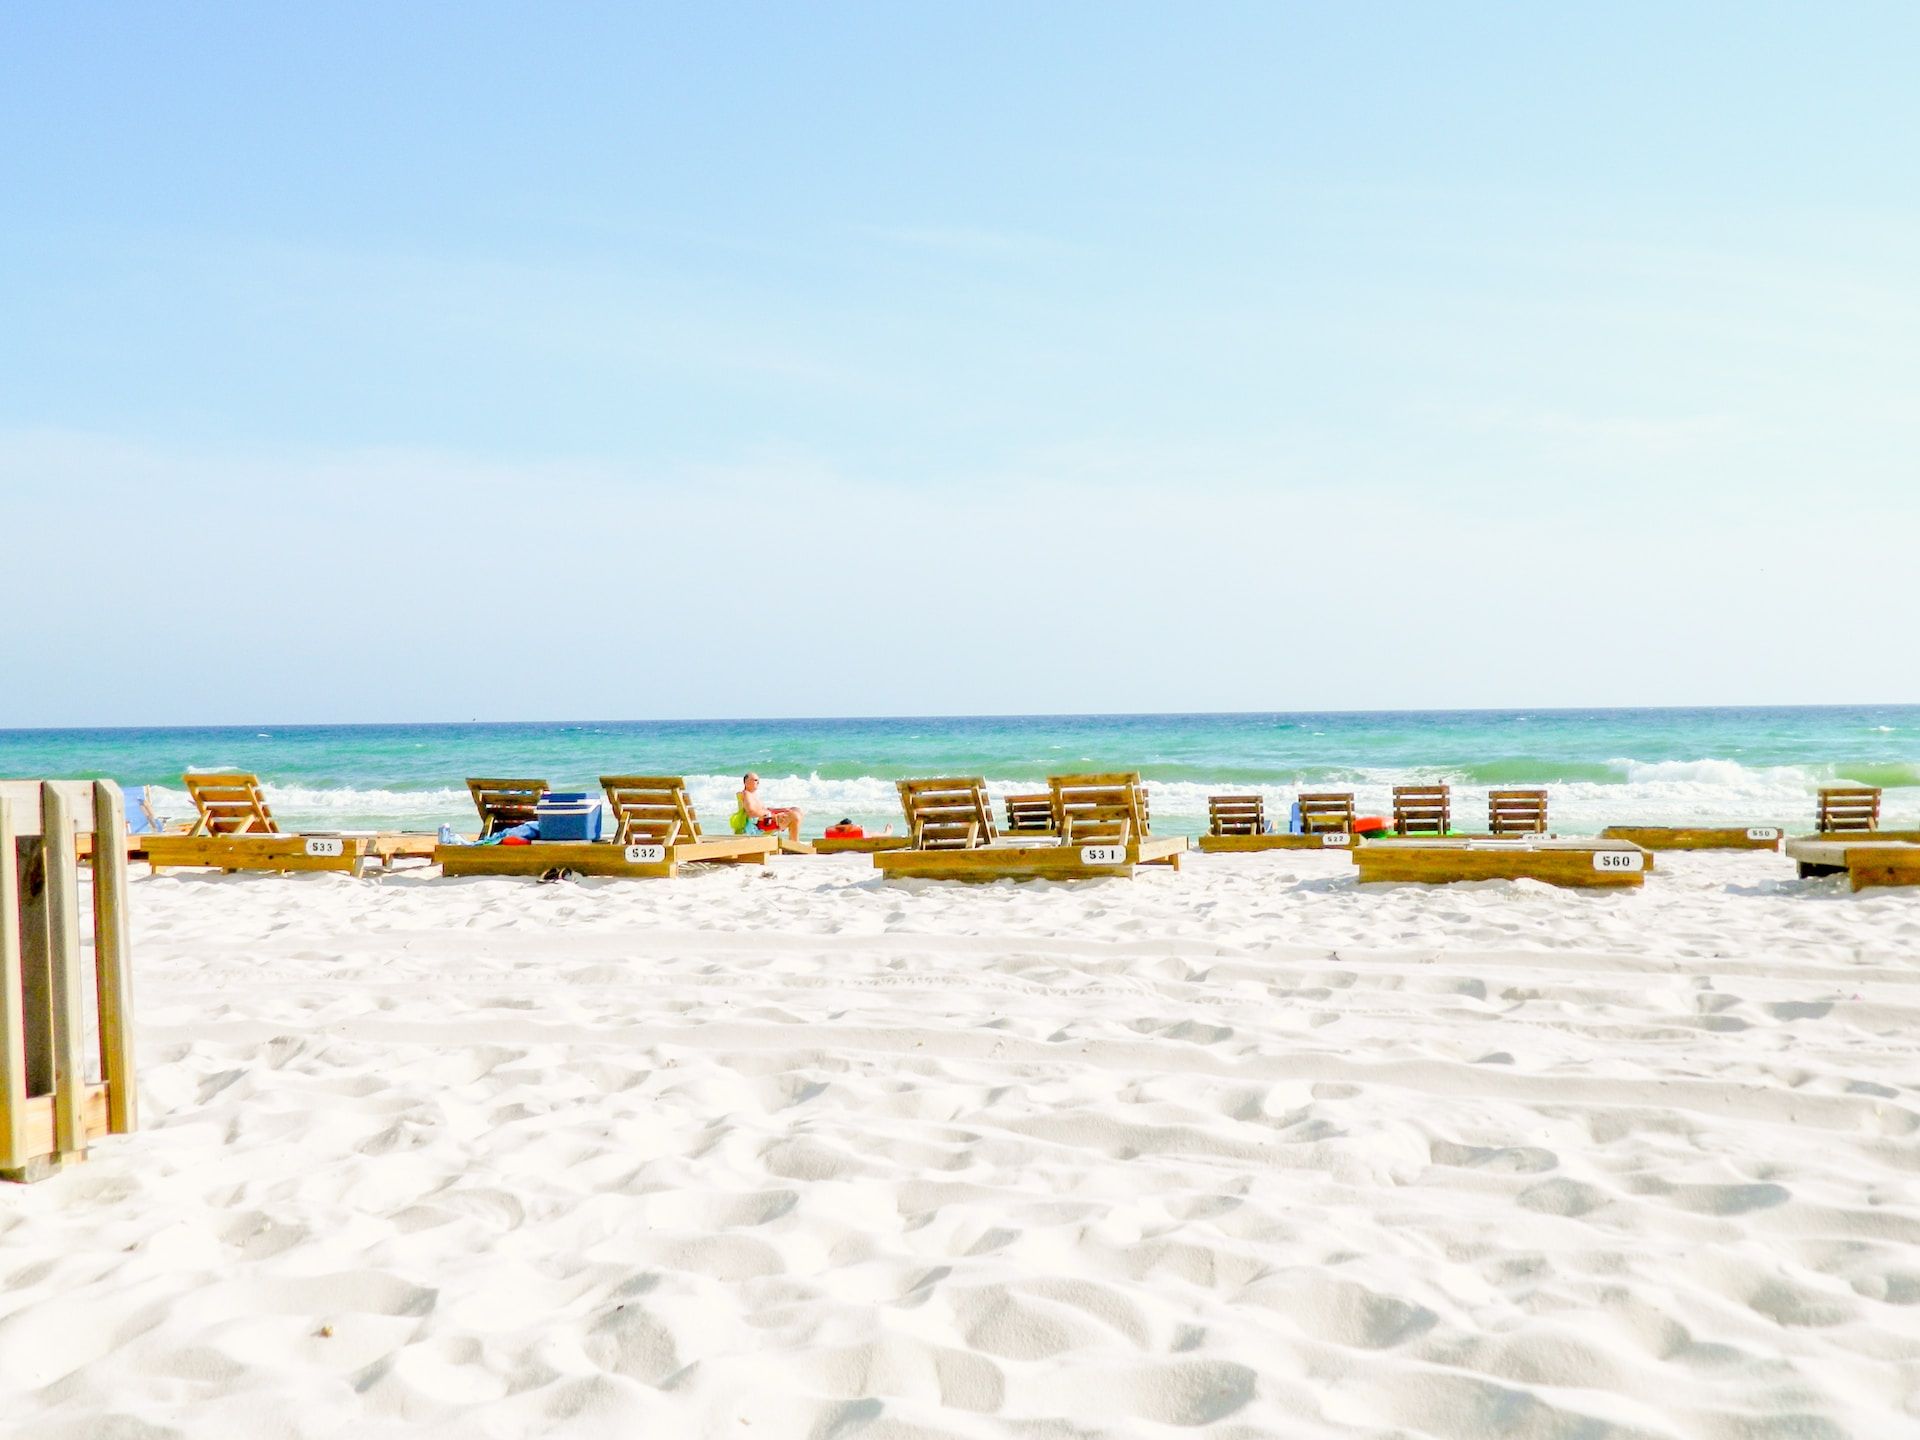 Beach chairs in the white sand of Panama City Beach, Florida